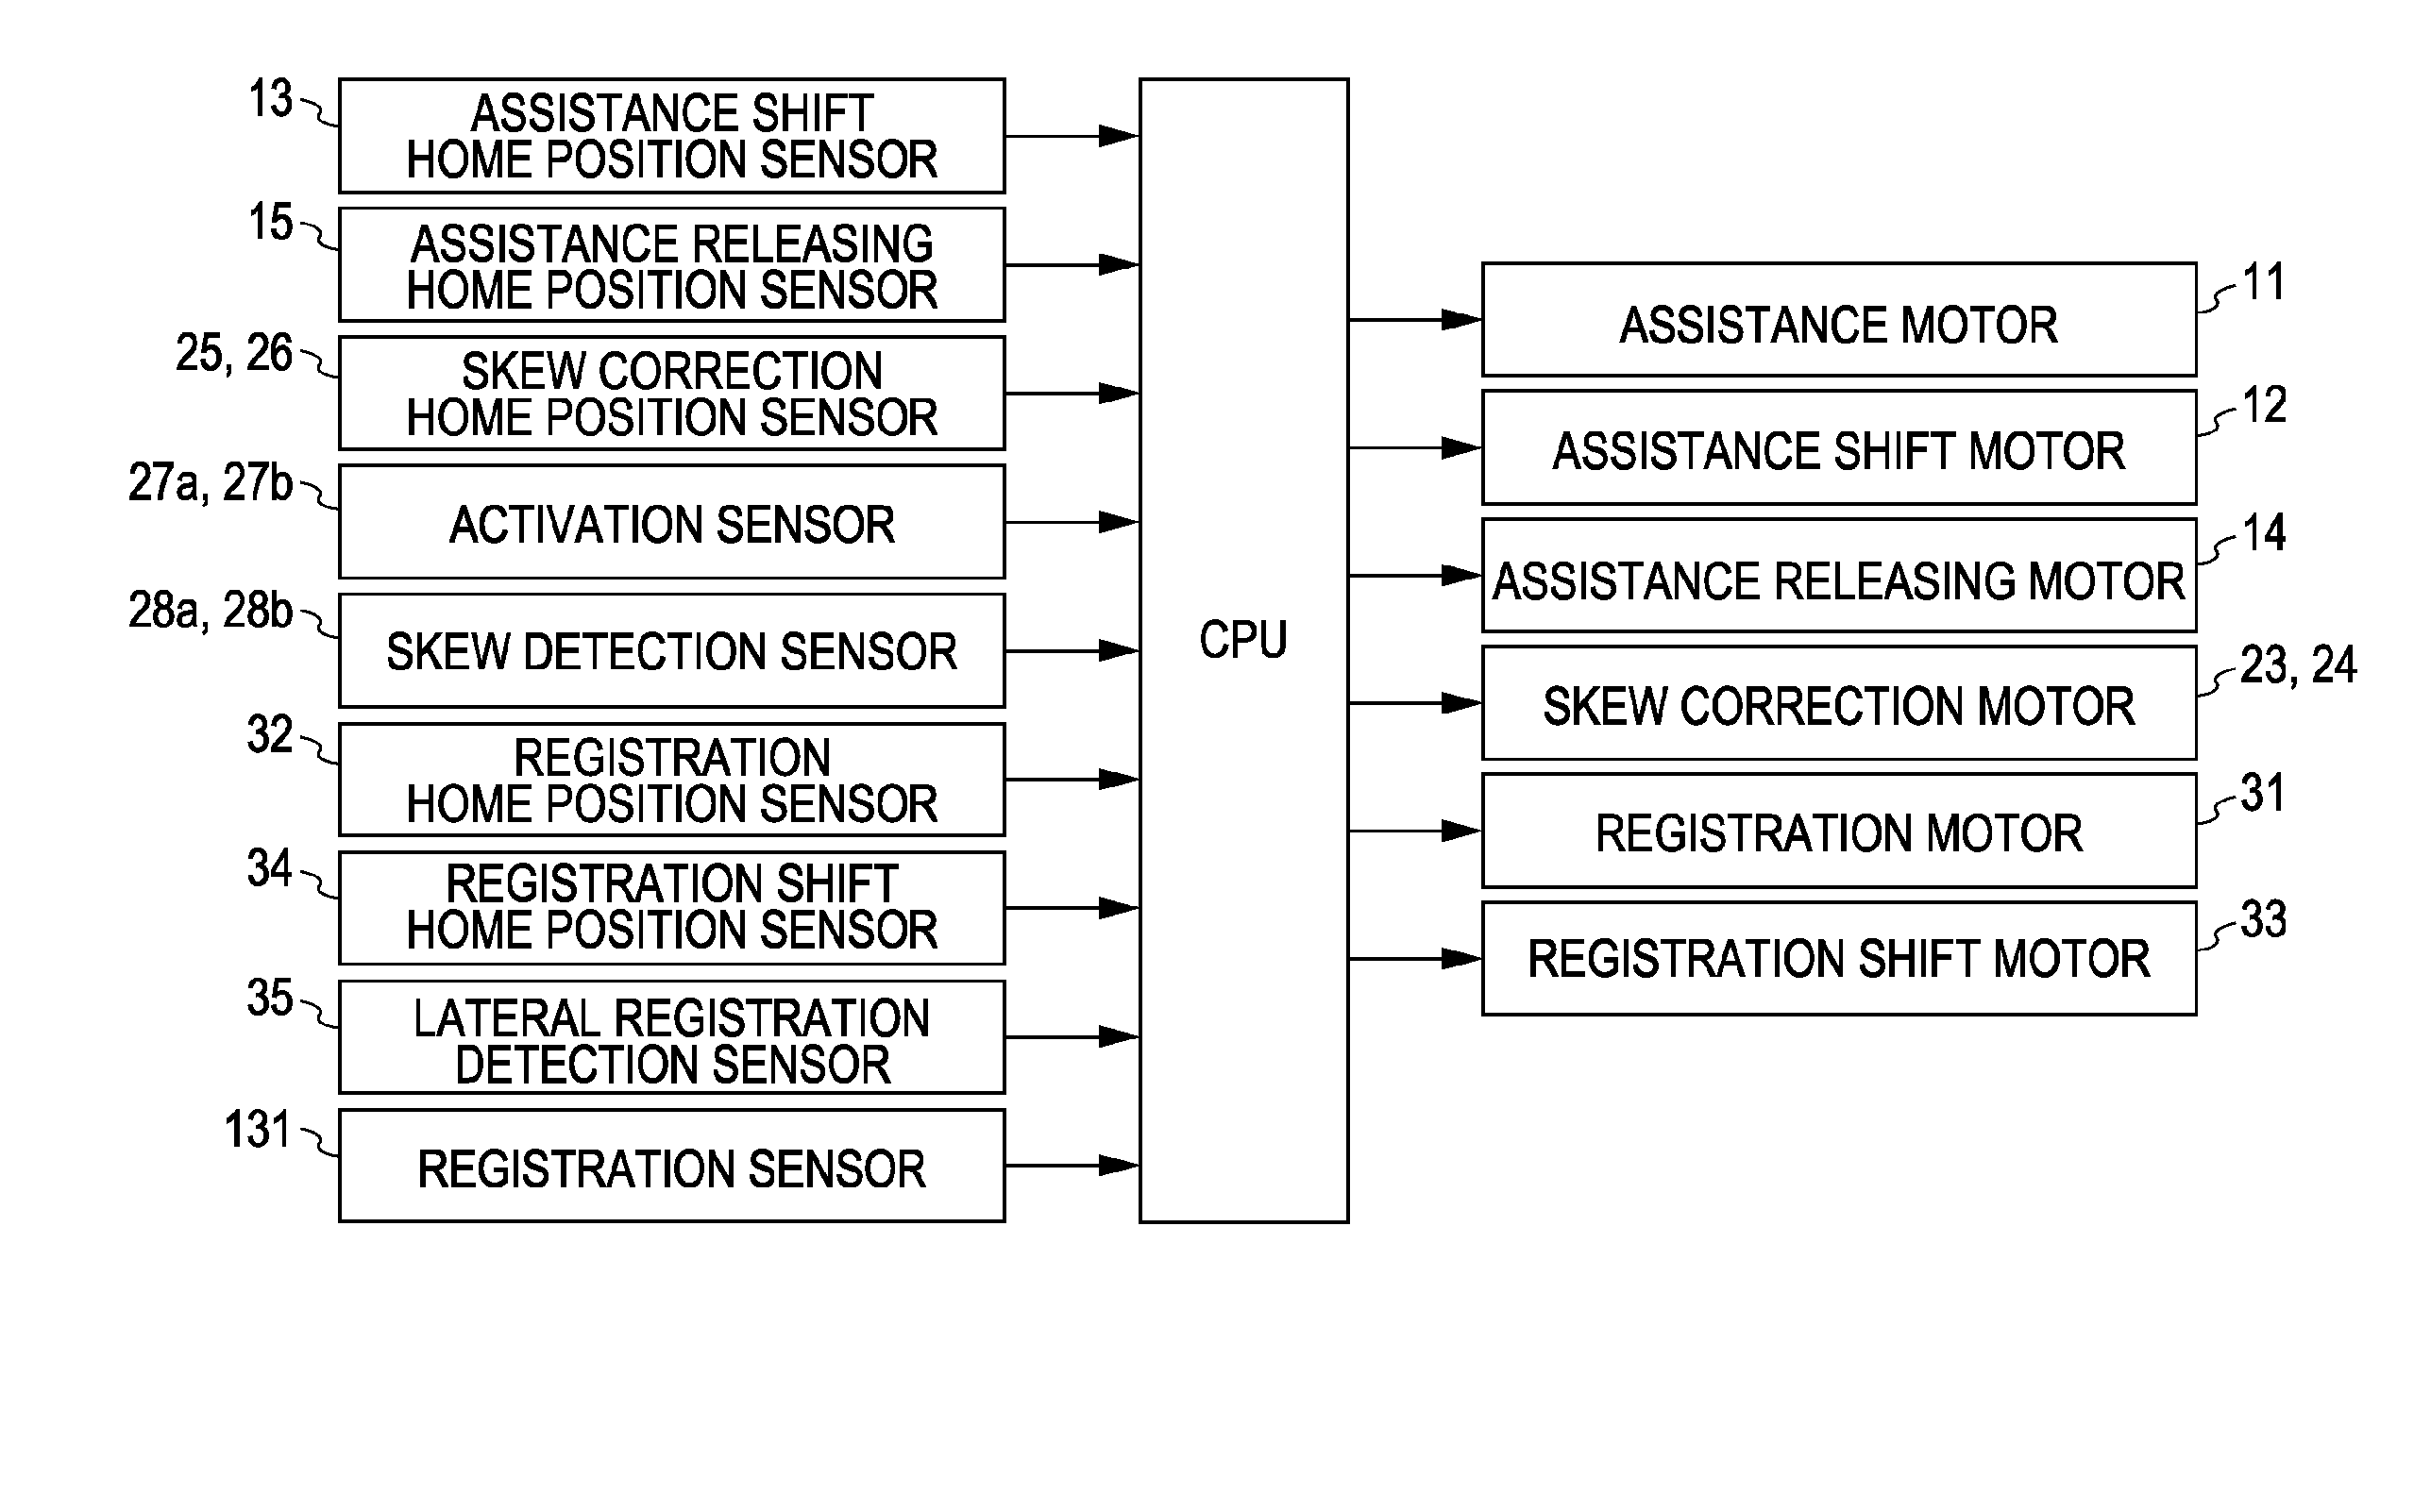 Sheet conveying apparatus, image forming apparatus, and image scanning apparatus